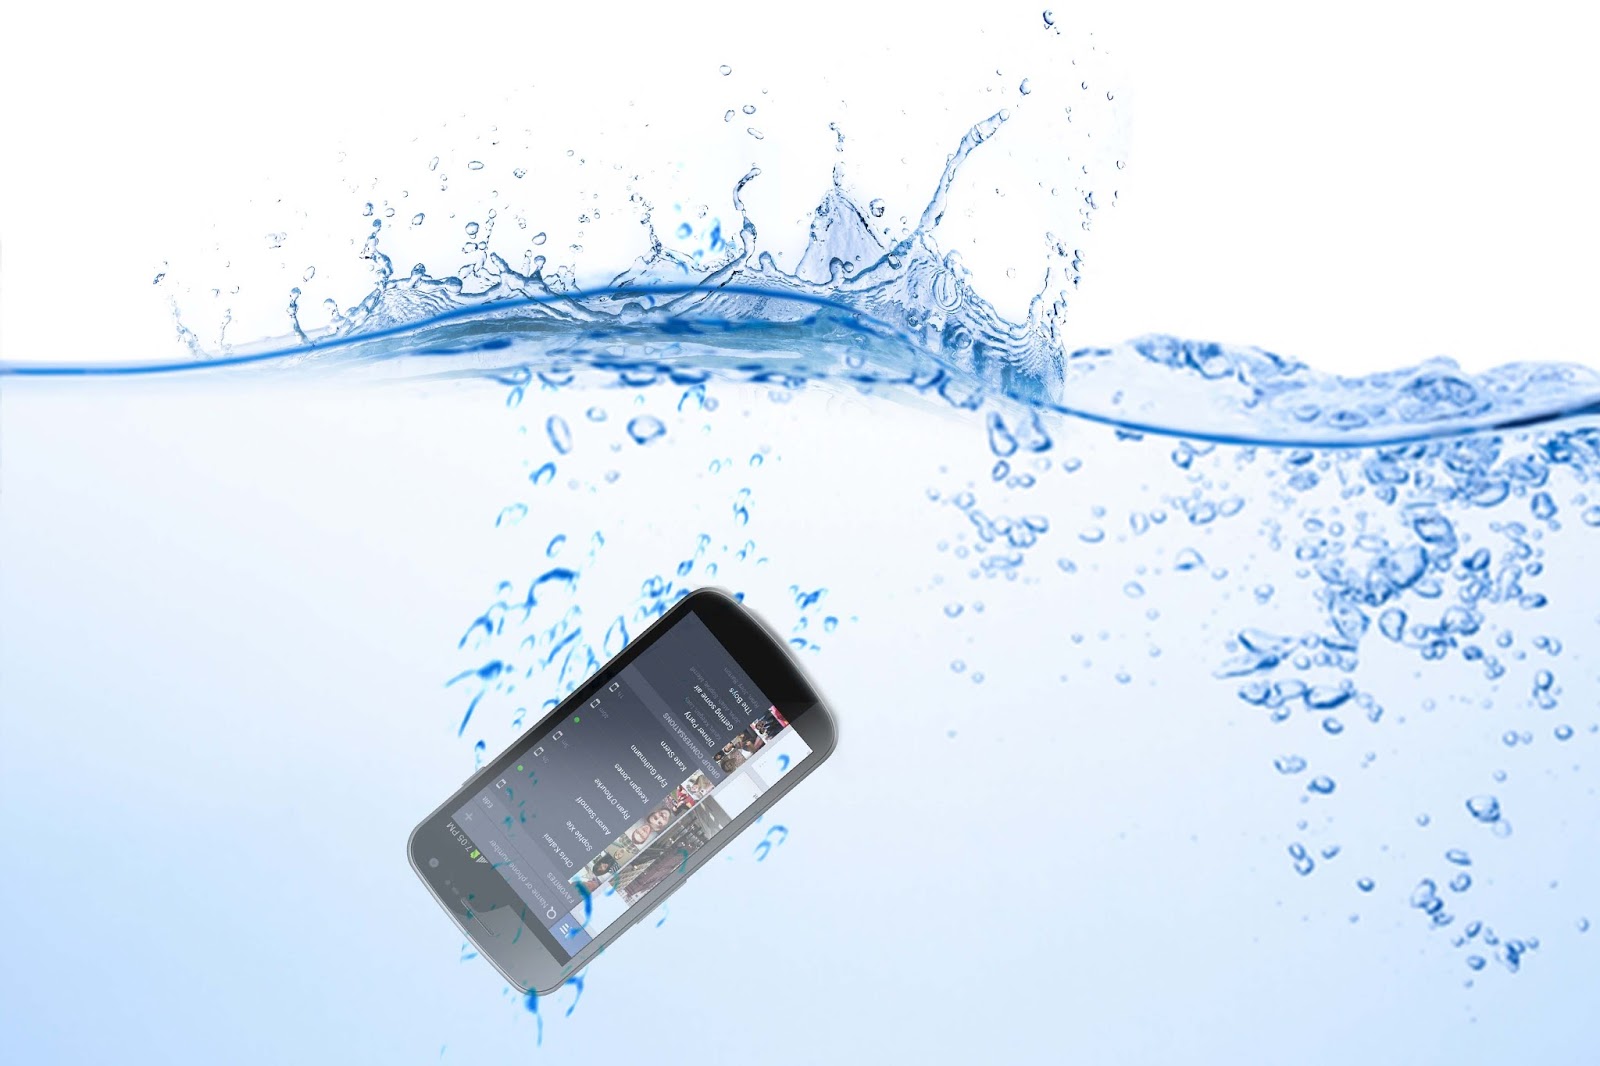 Телефон воде видео. Water Phone 340 вс. Phone in the Water. Water Control in Phone. Drop Phone.